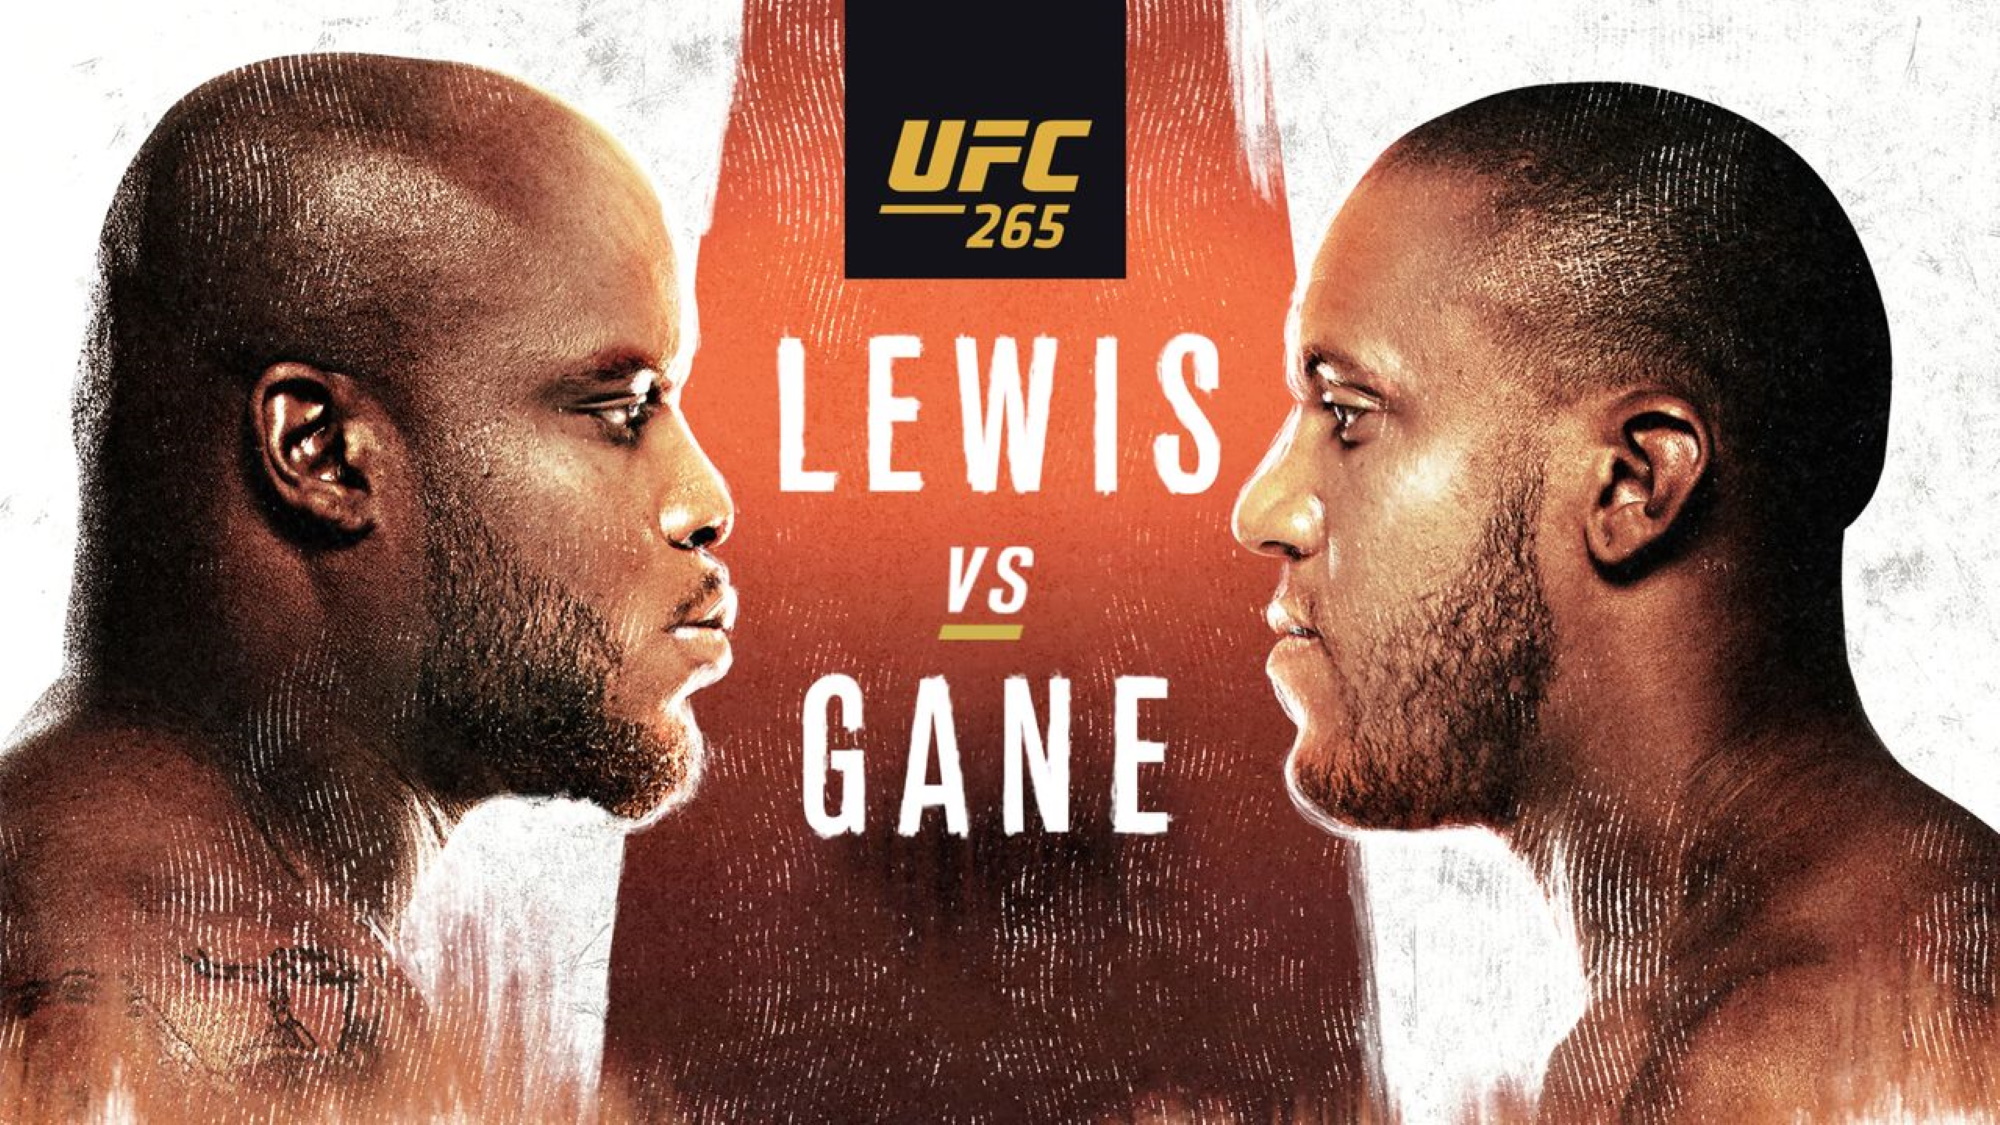 UFC Fight Night Live Stream Online